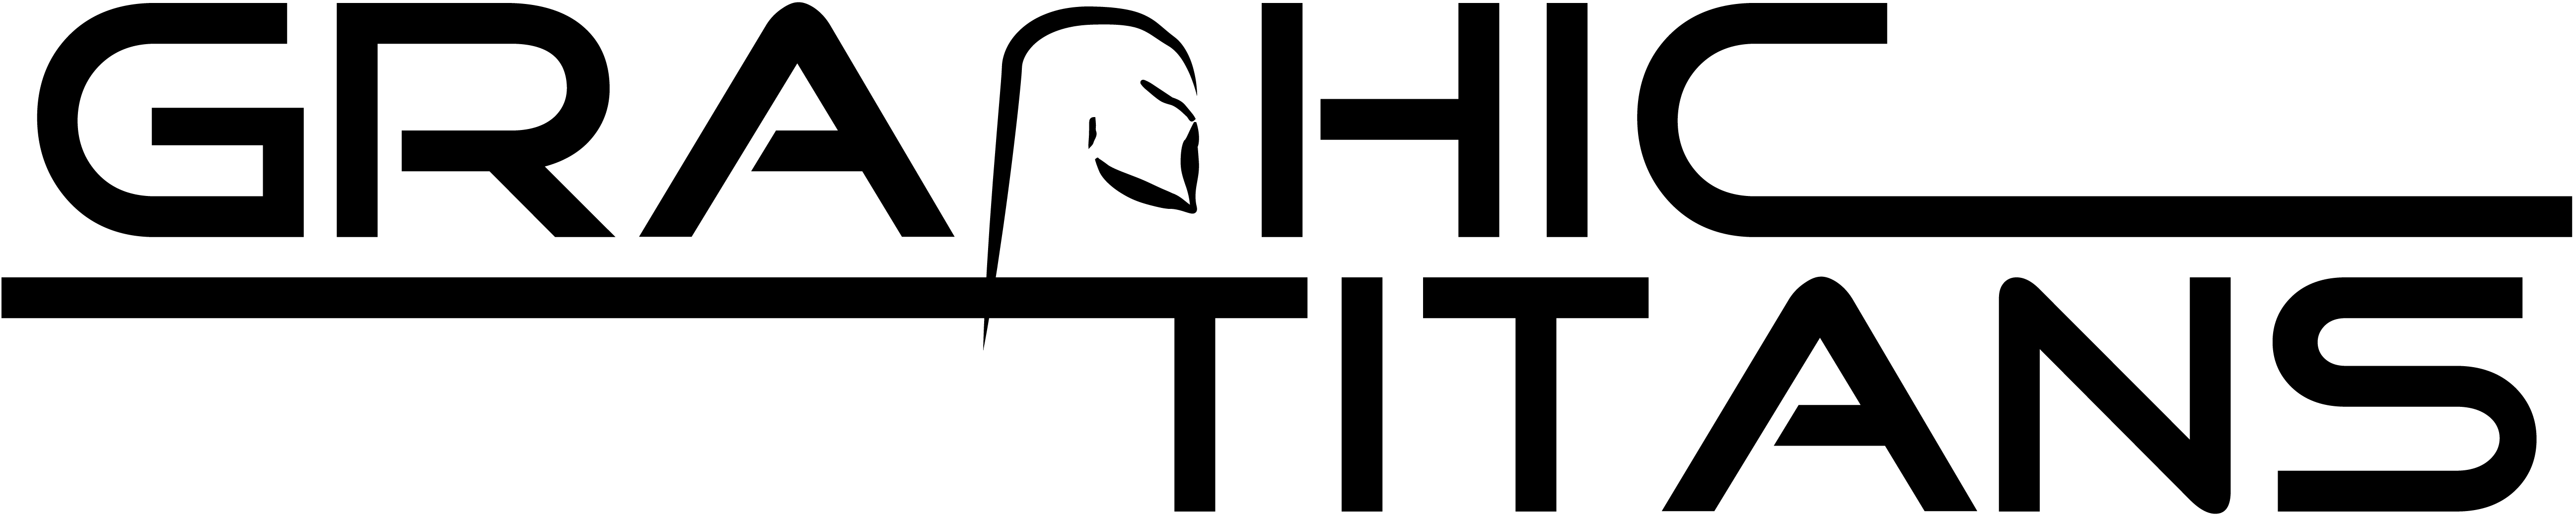 Graphic Titans Logo in Black